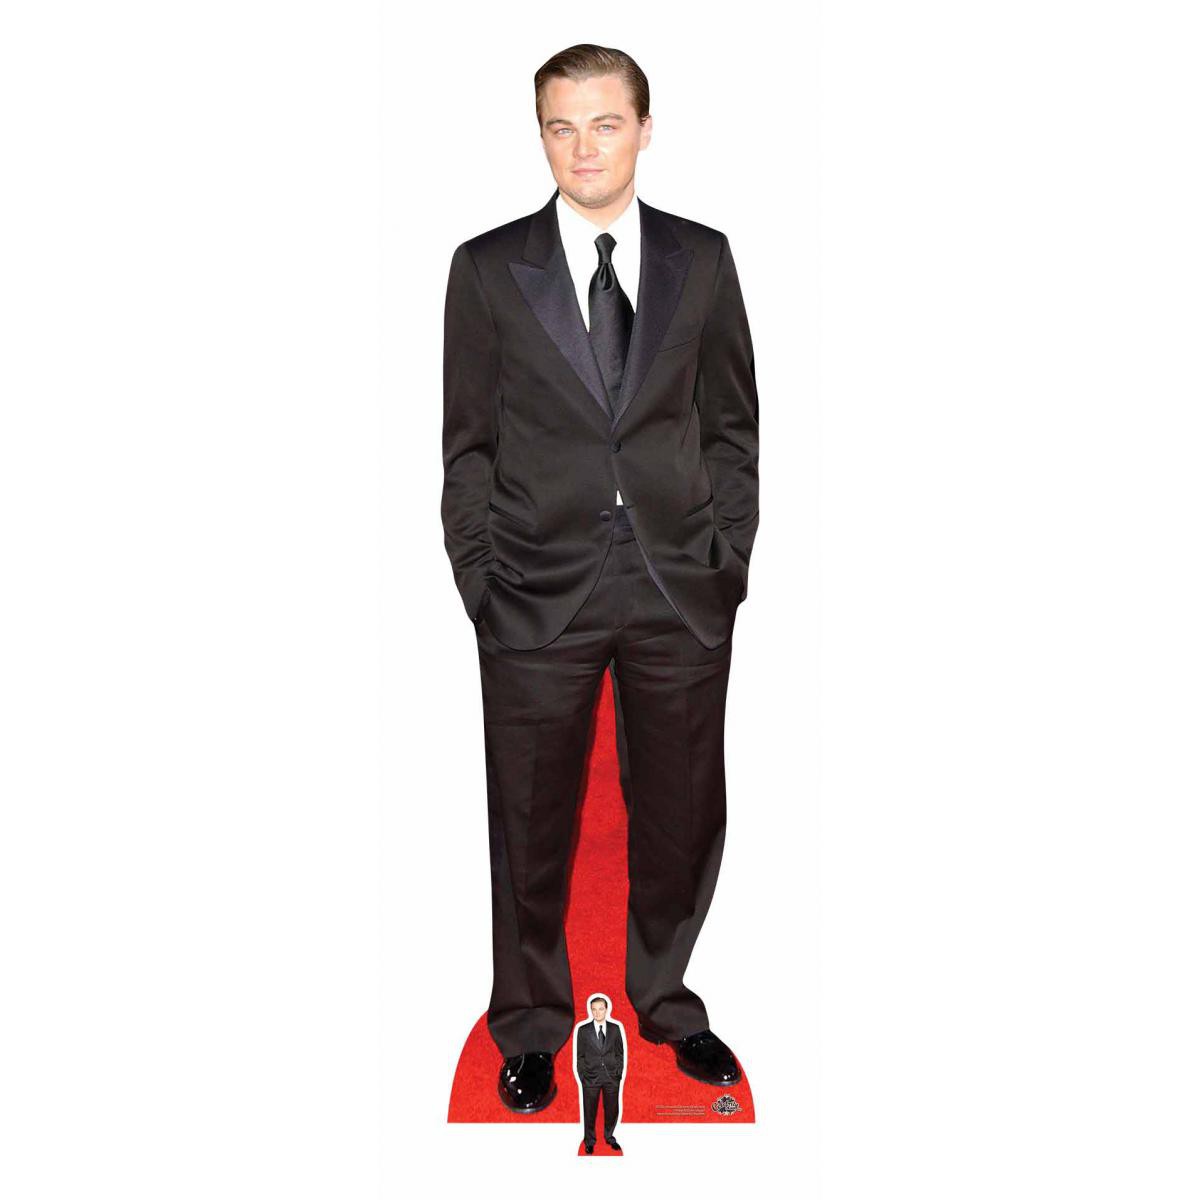 Star Cutouts - Figurine en carton taille reelle Leonardo DiCaprio (costume noir) 183cm - Statues